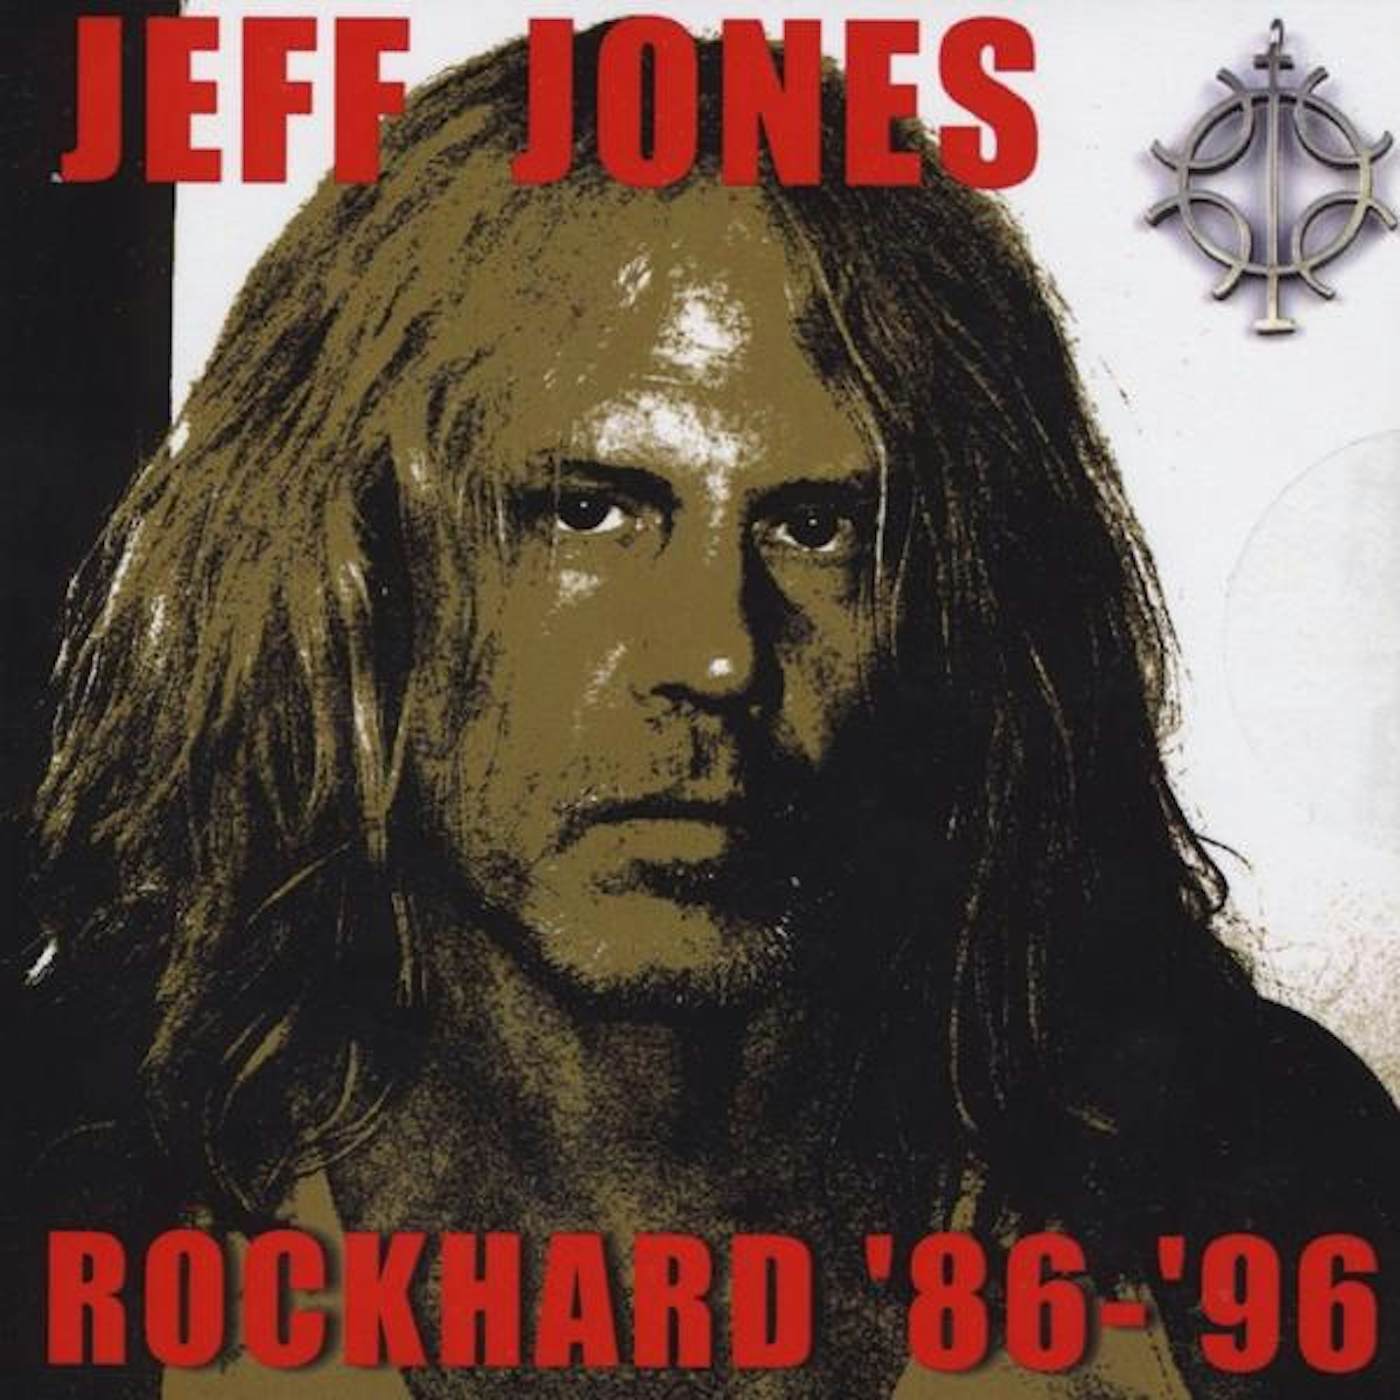 Jeff Jones ROCKHARD 1986-96 CD